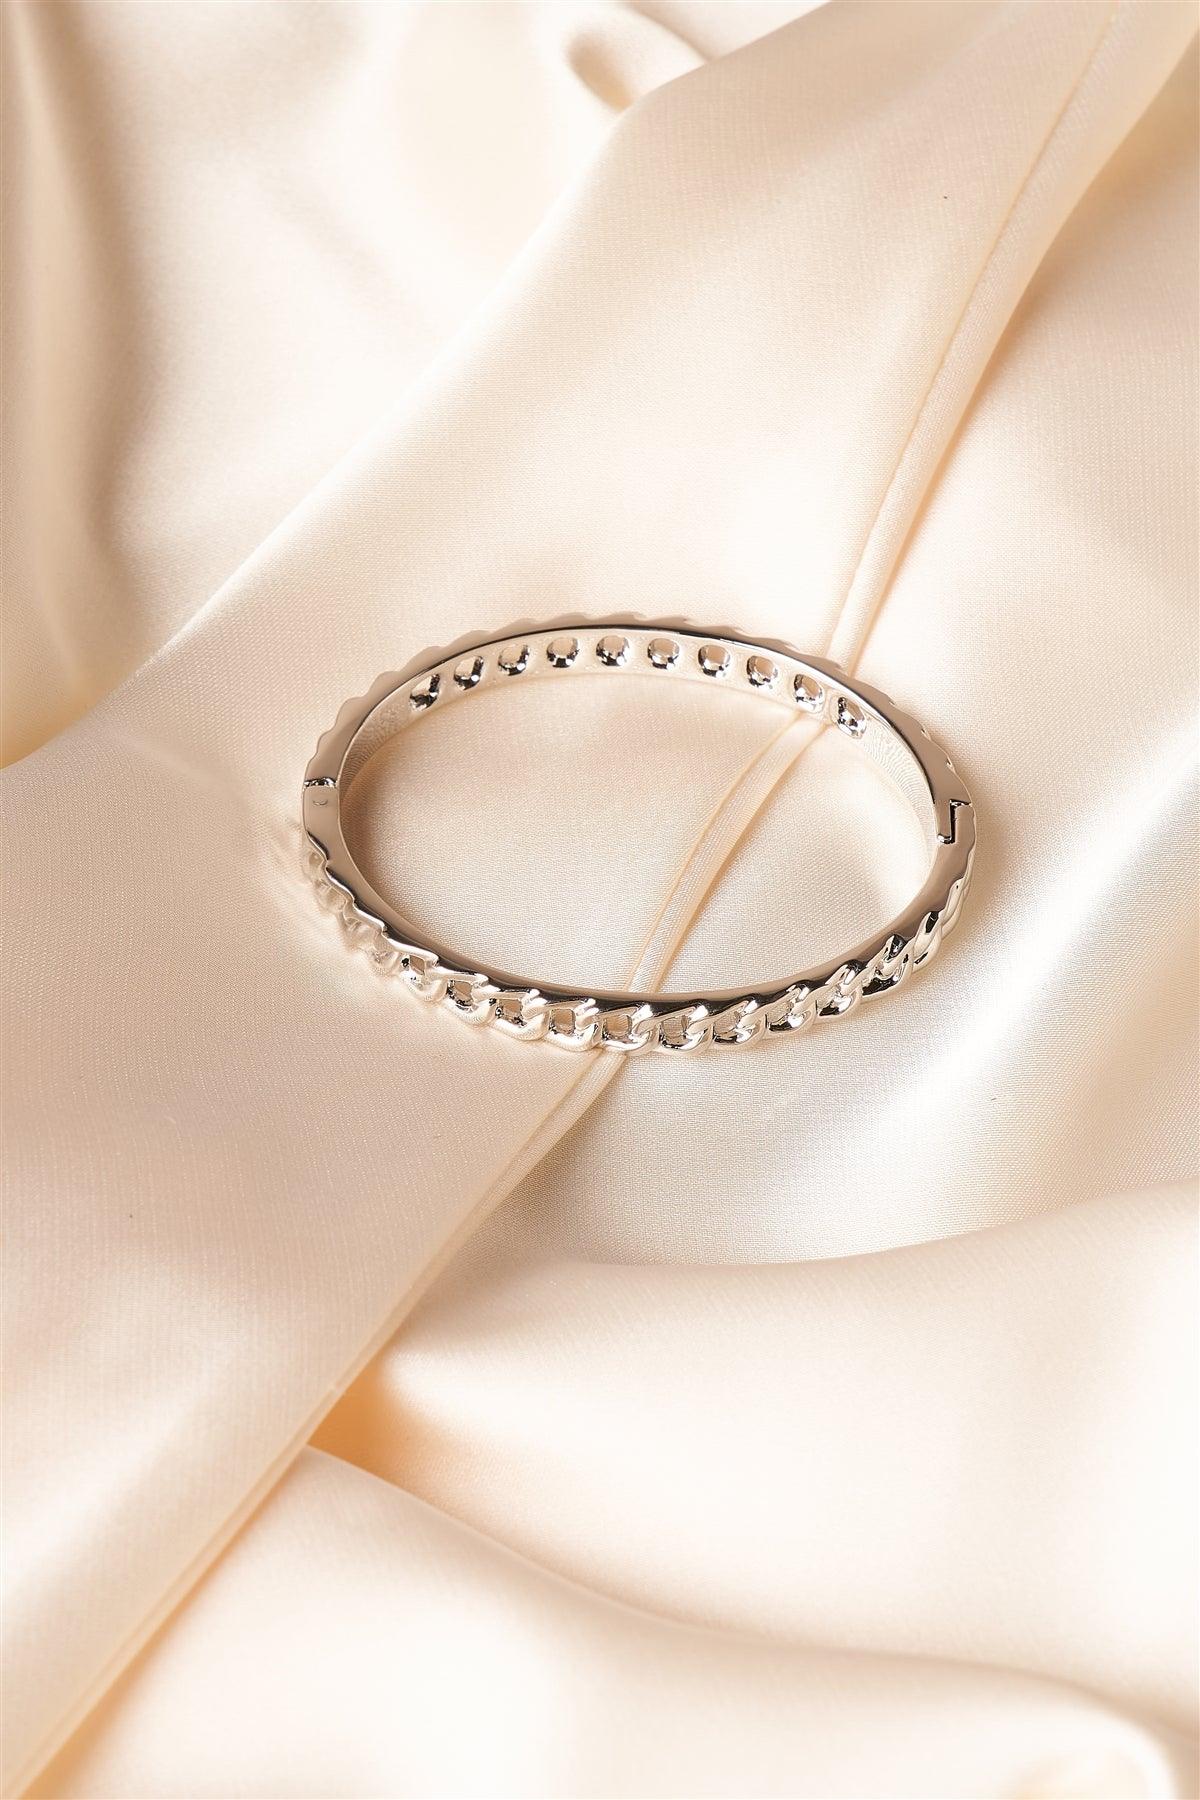 Silver Solid Chain Link Bangle Bracelet /6 Pieces